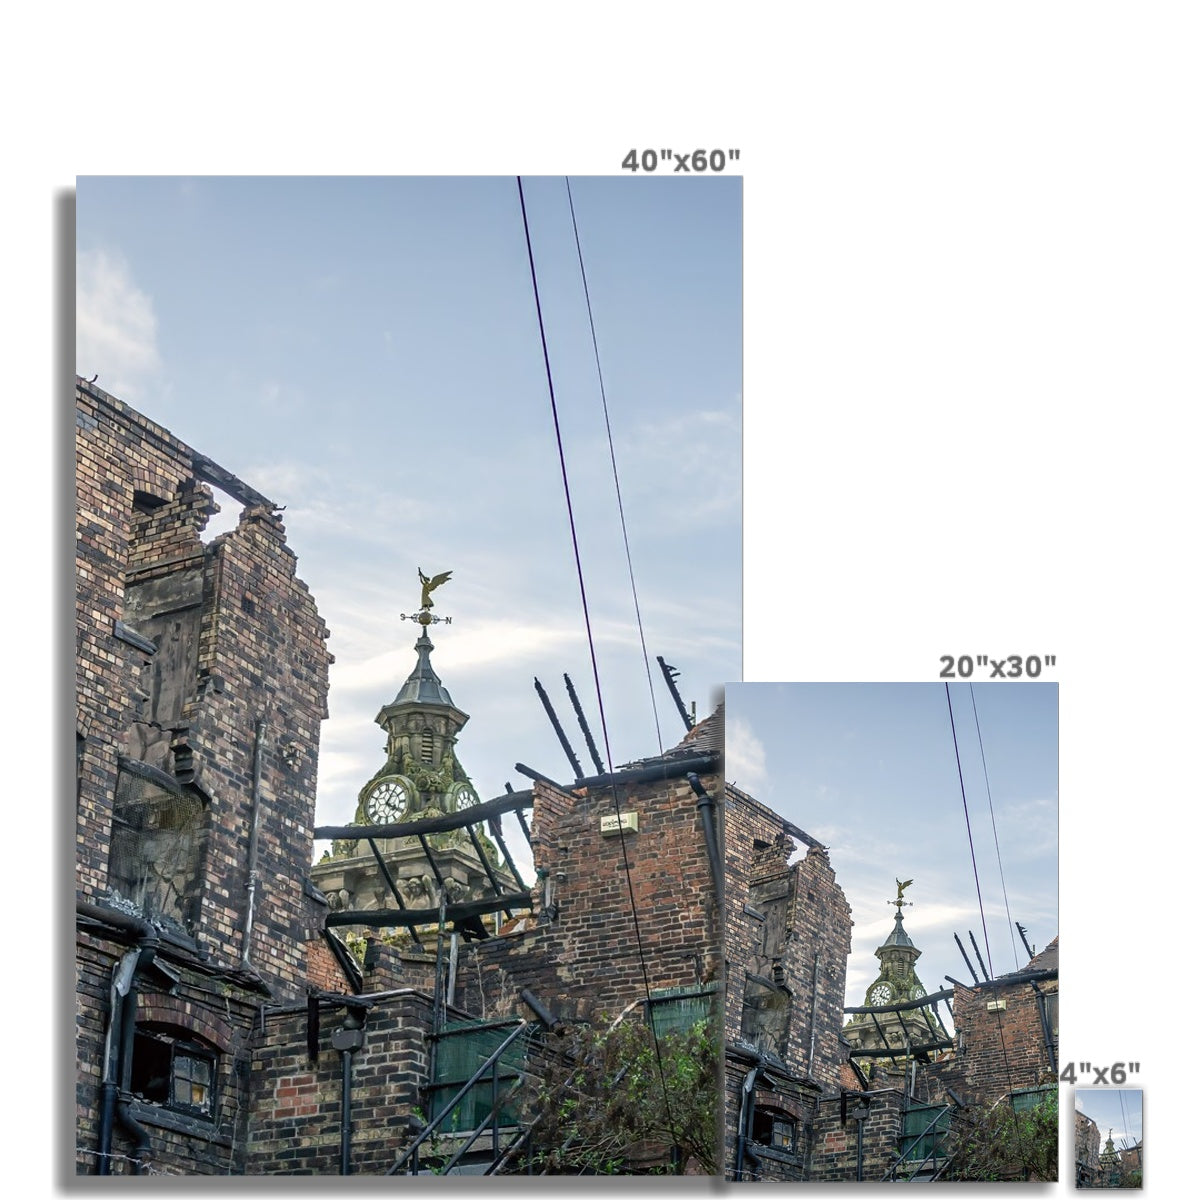 Burslem Town Hall, viewed through the ruin of The Leopard, Burslem Hahnemühle Photo Rag Print